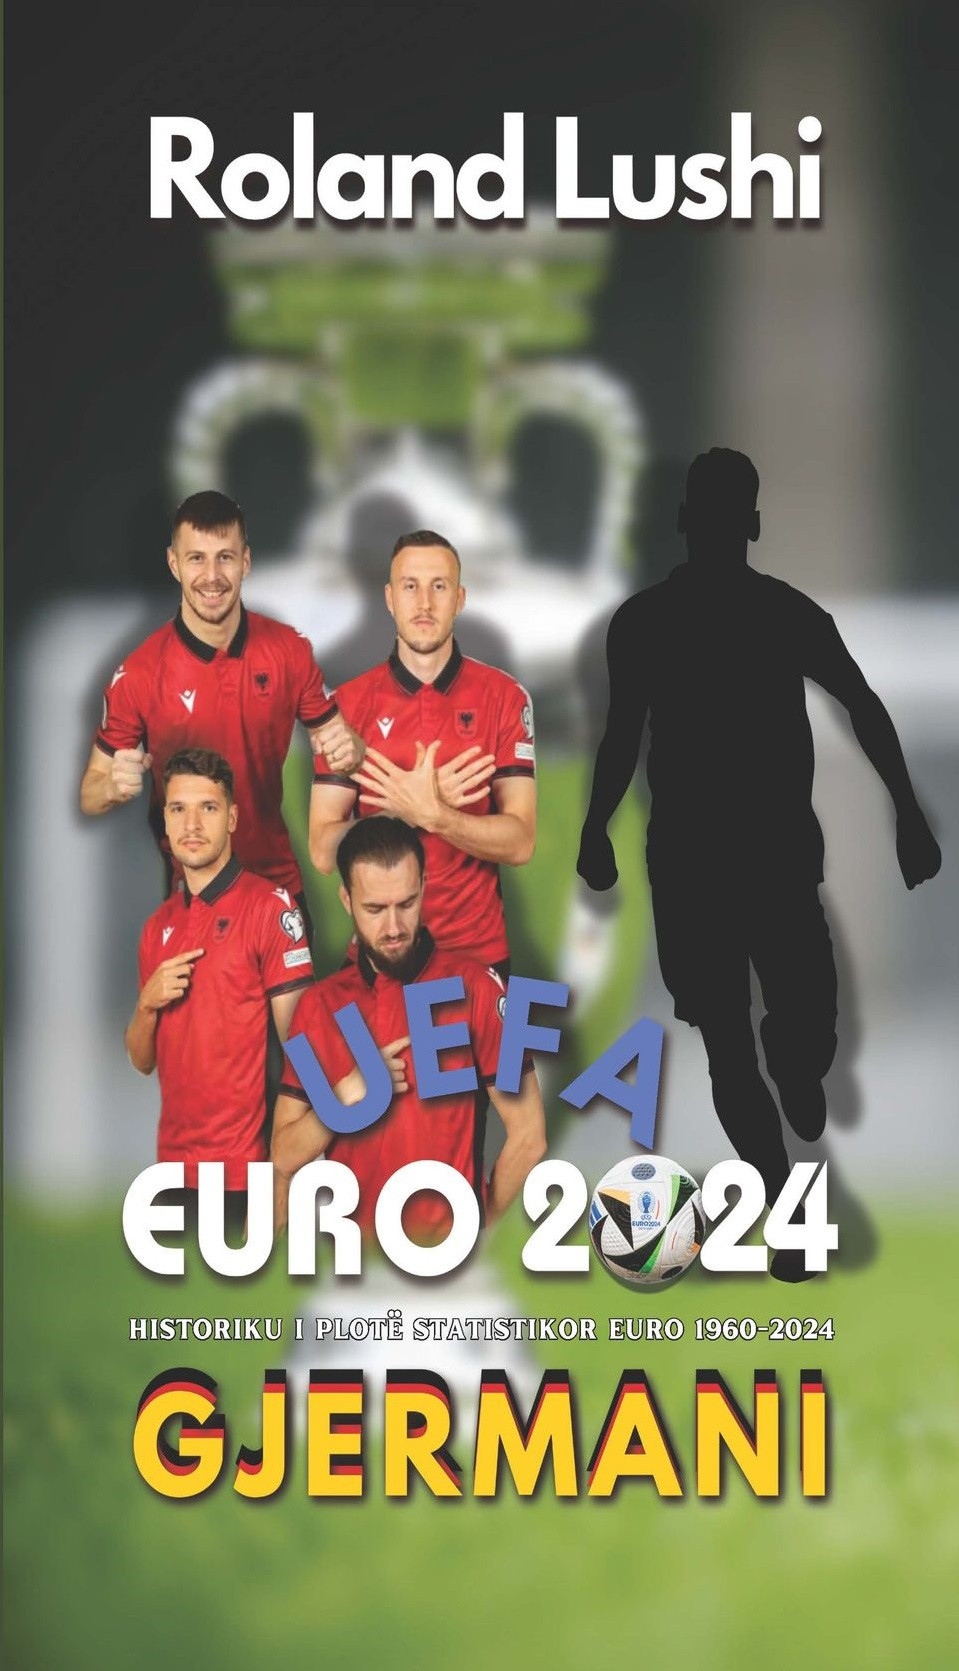 UEFA Euro 2024 - GJERMANI